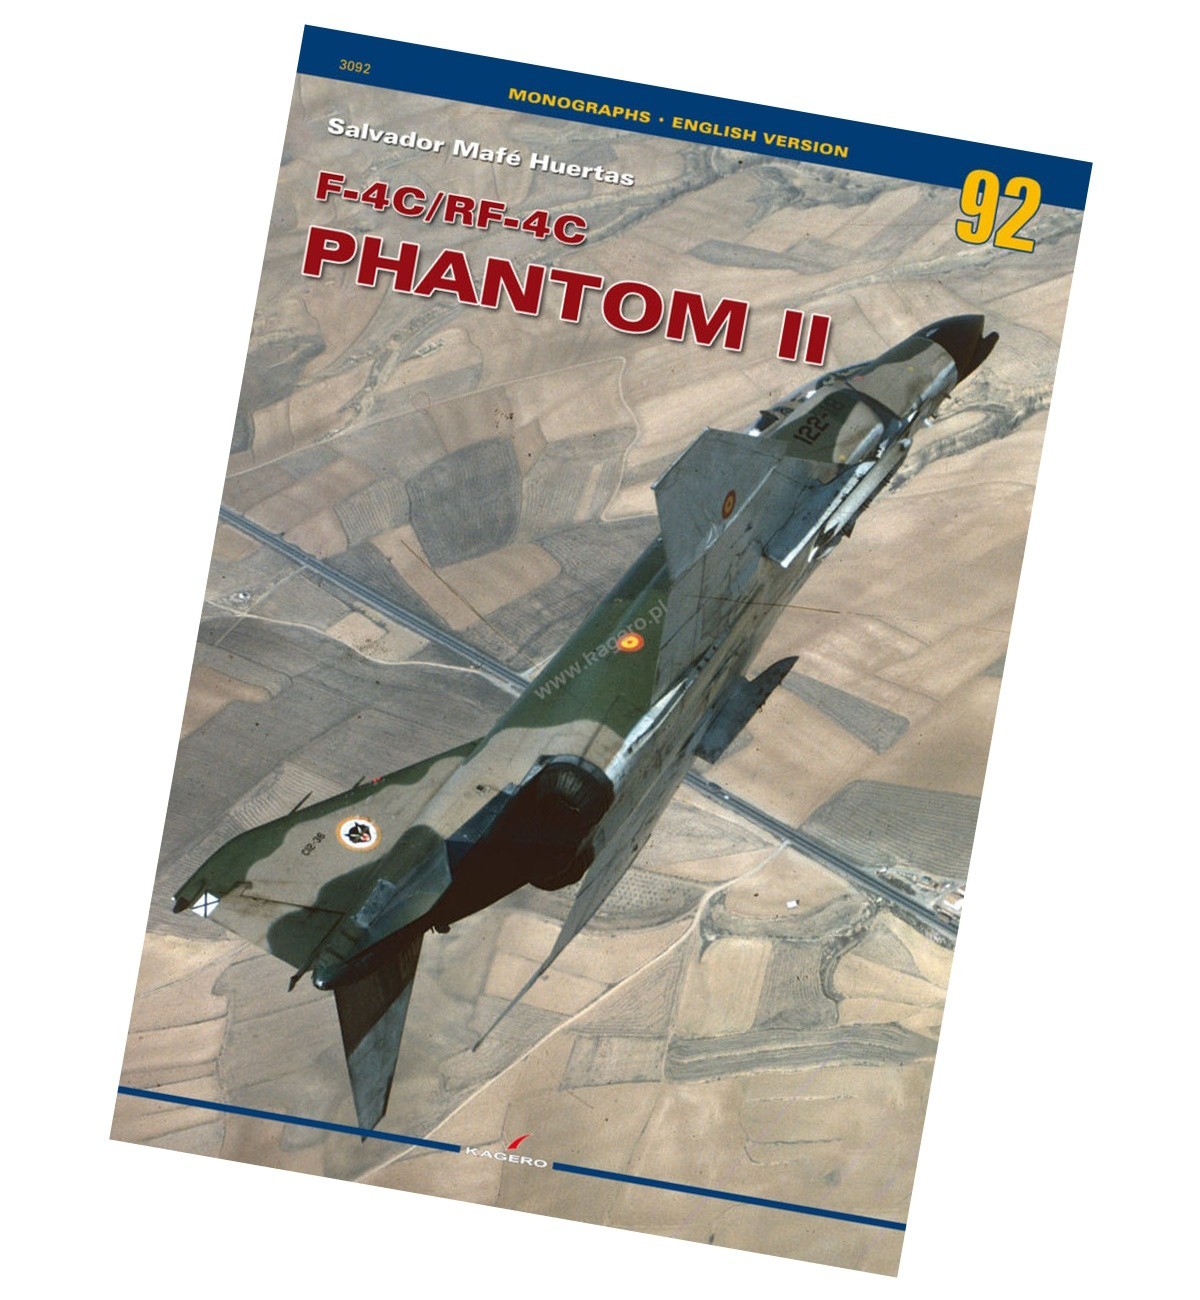 Kagero to Unveil a New Monograph on the McDonnell Douglas F-4C/RF-4C Phantom II